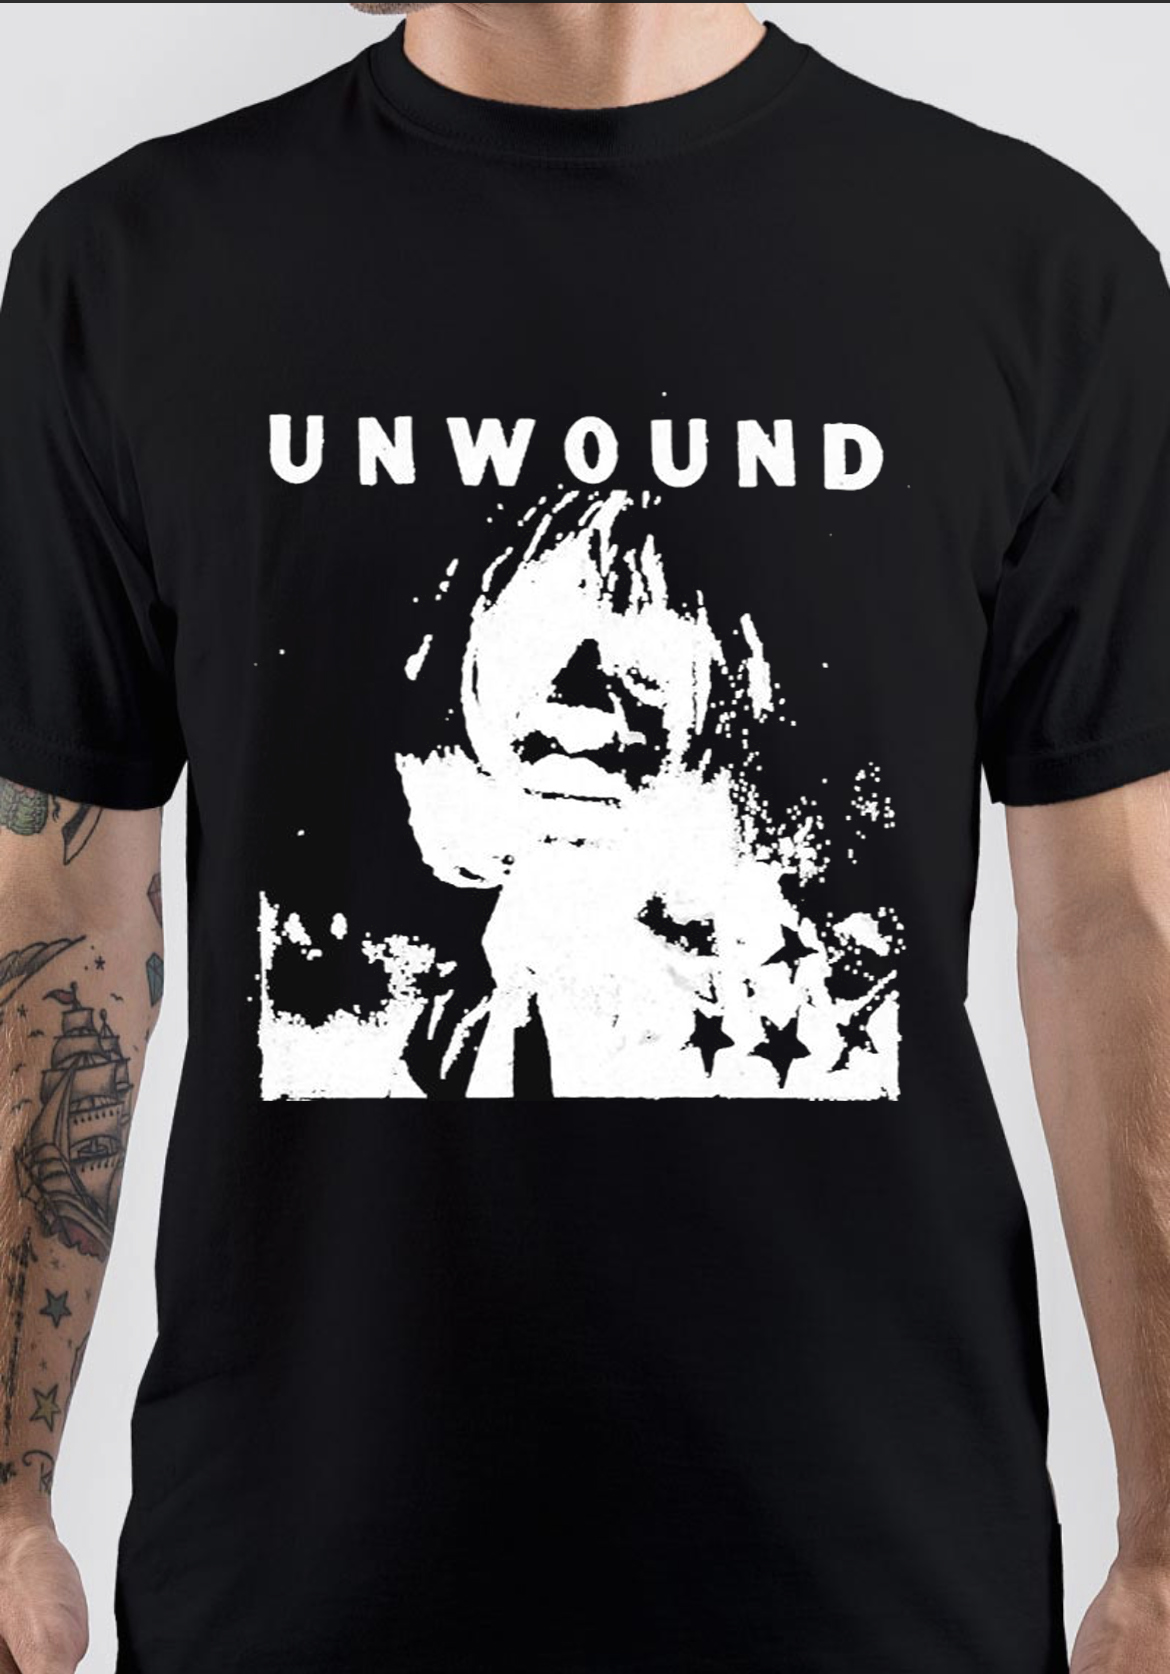 Unwound T-Shirt And merchandise